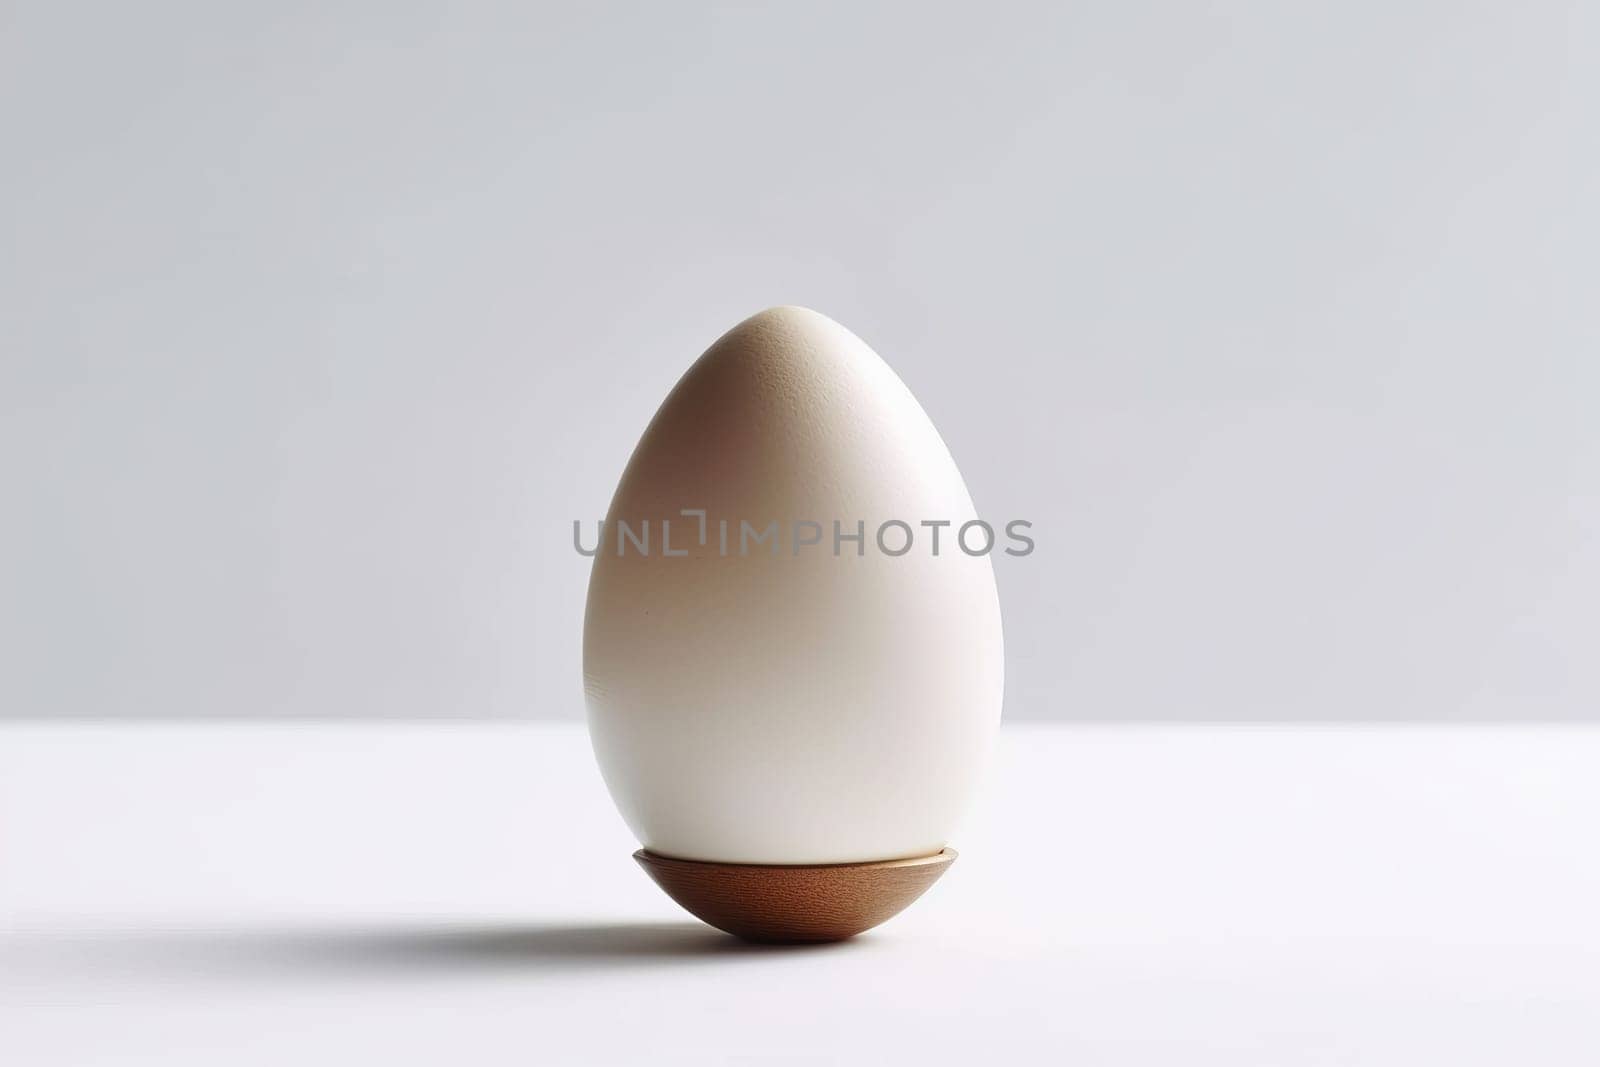 White egg on white background in center. Design, visual art, minimalism. Generated AI.